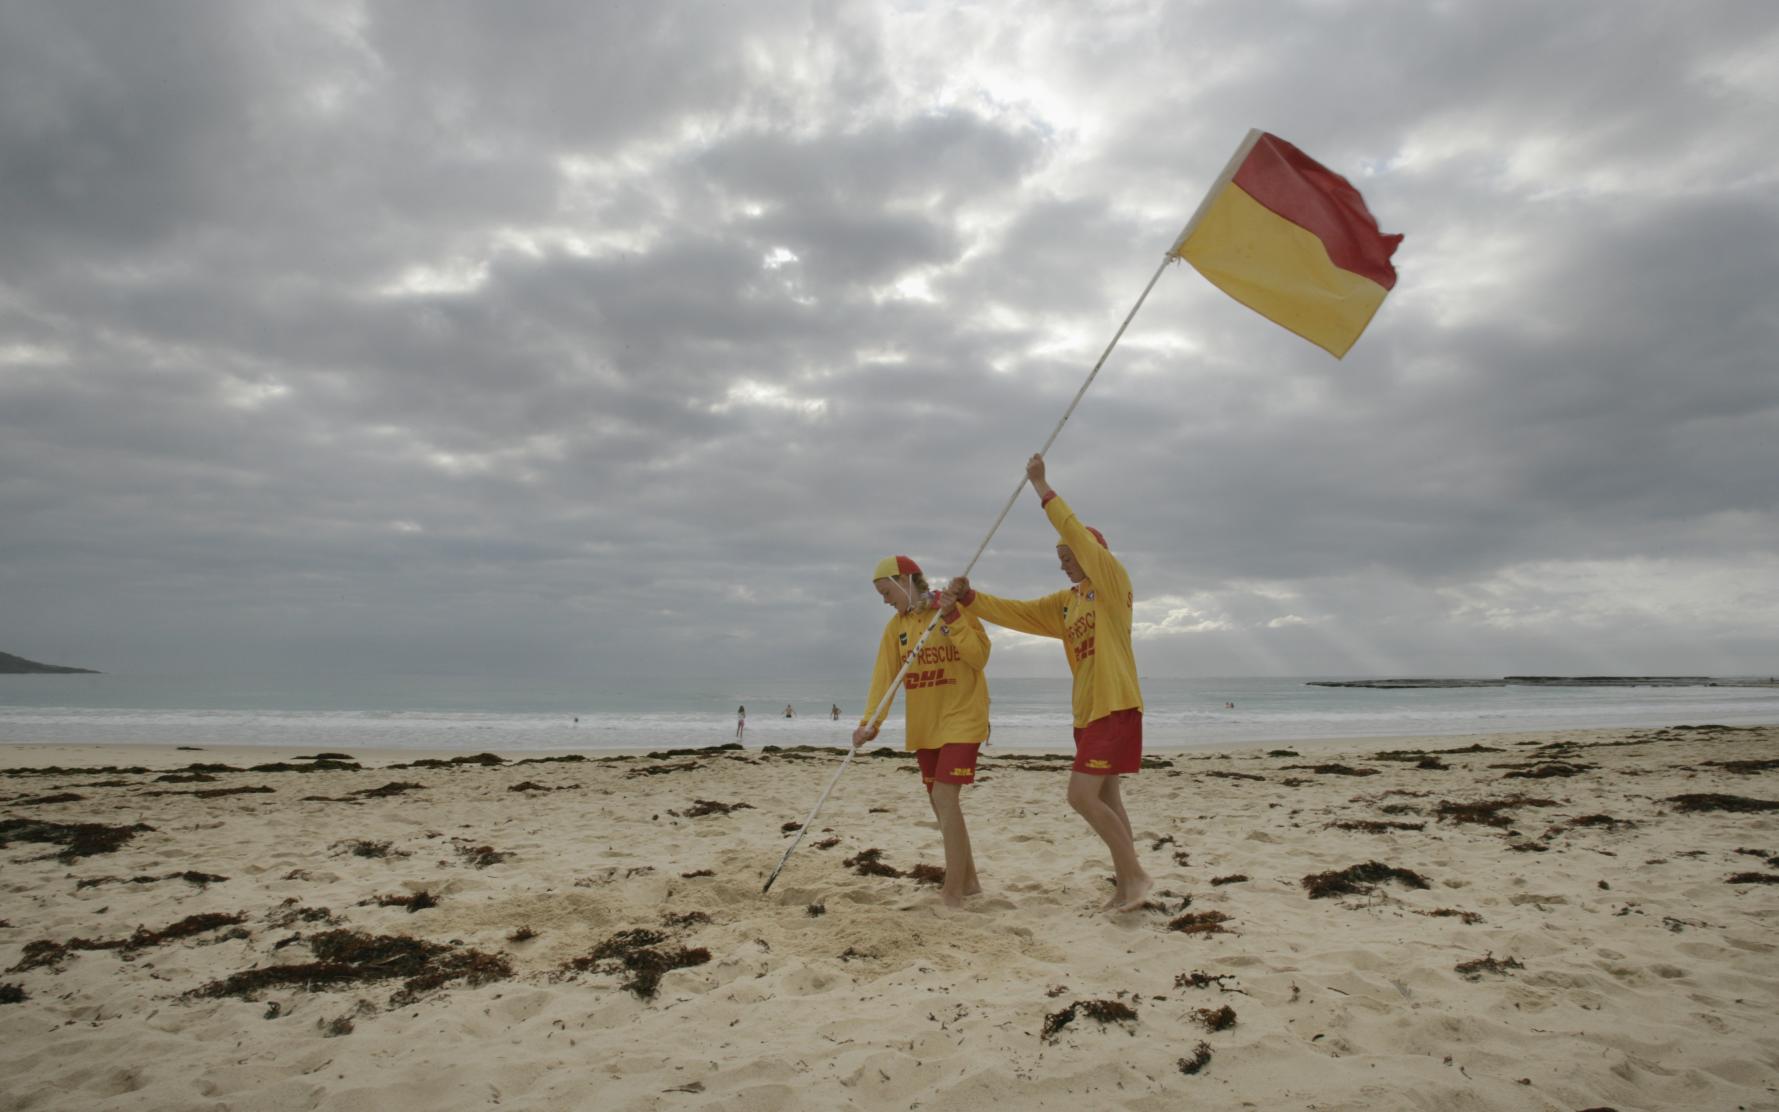 Surf lifesavers, Mollymook, New South Wales, 2006.